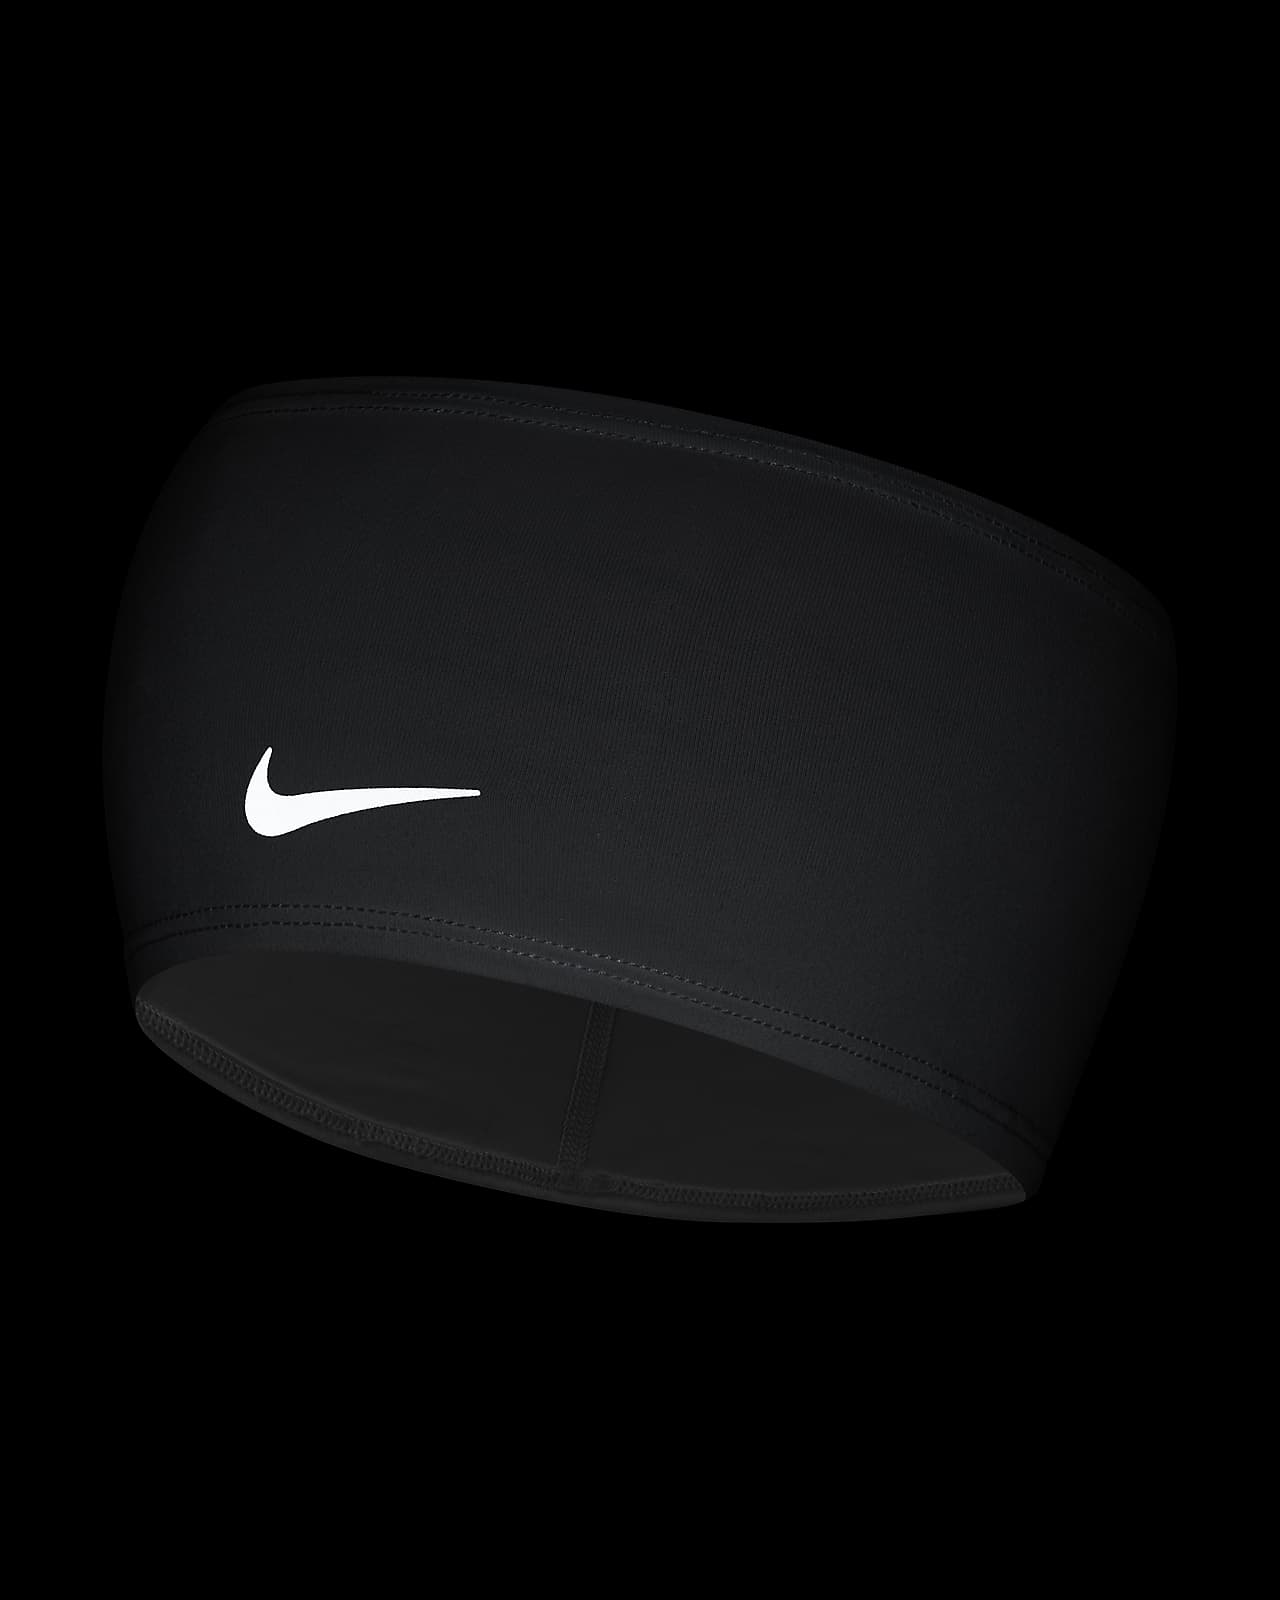 Injerto embotellamiento Patriótico Nike Dri-FIT Swoosh Cinta para el pelo 2.0. Nike ES